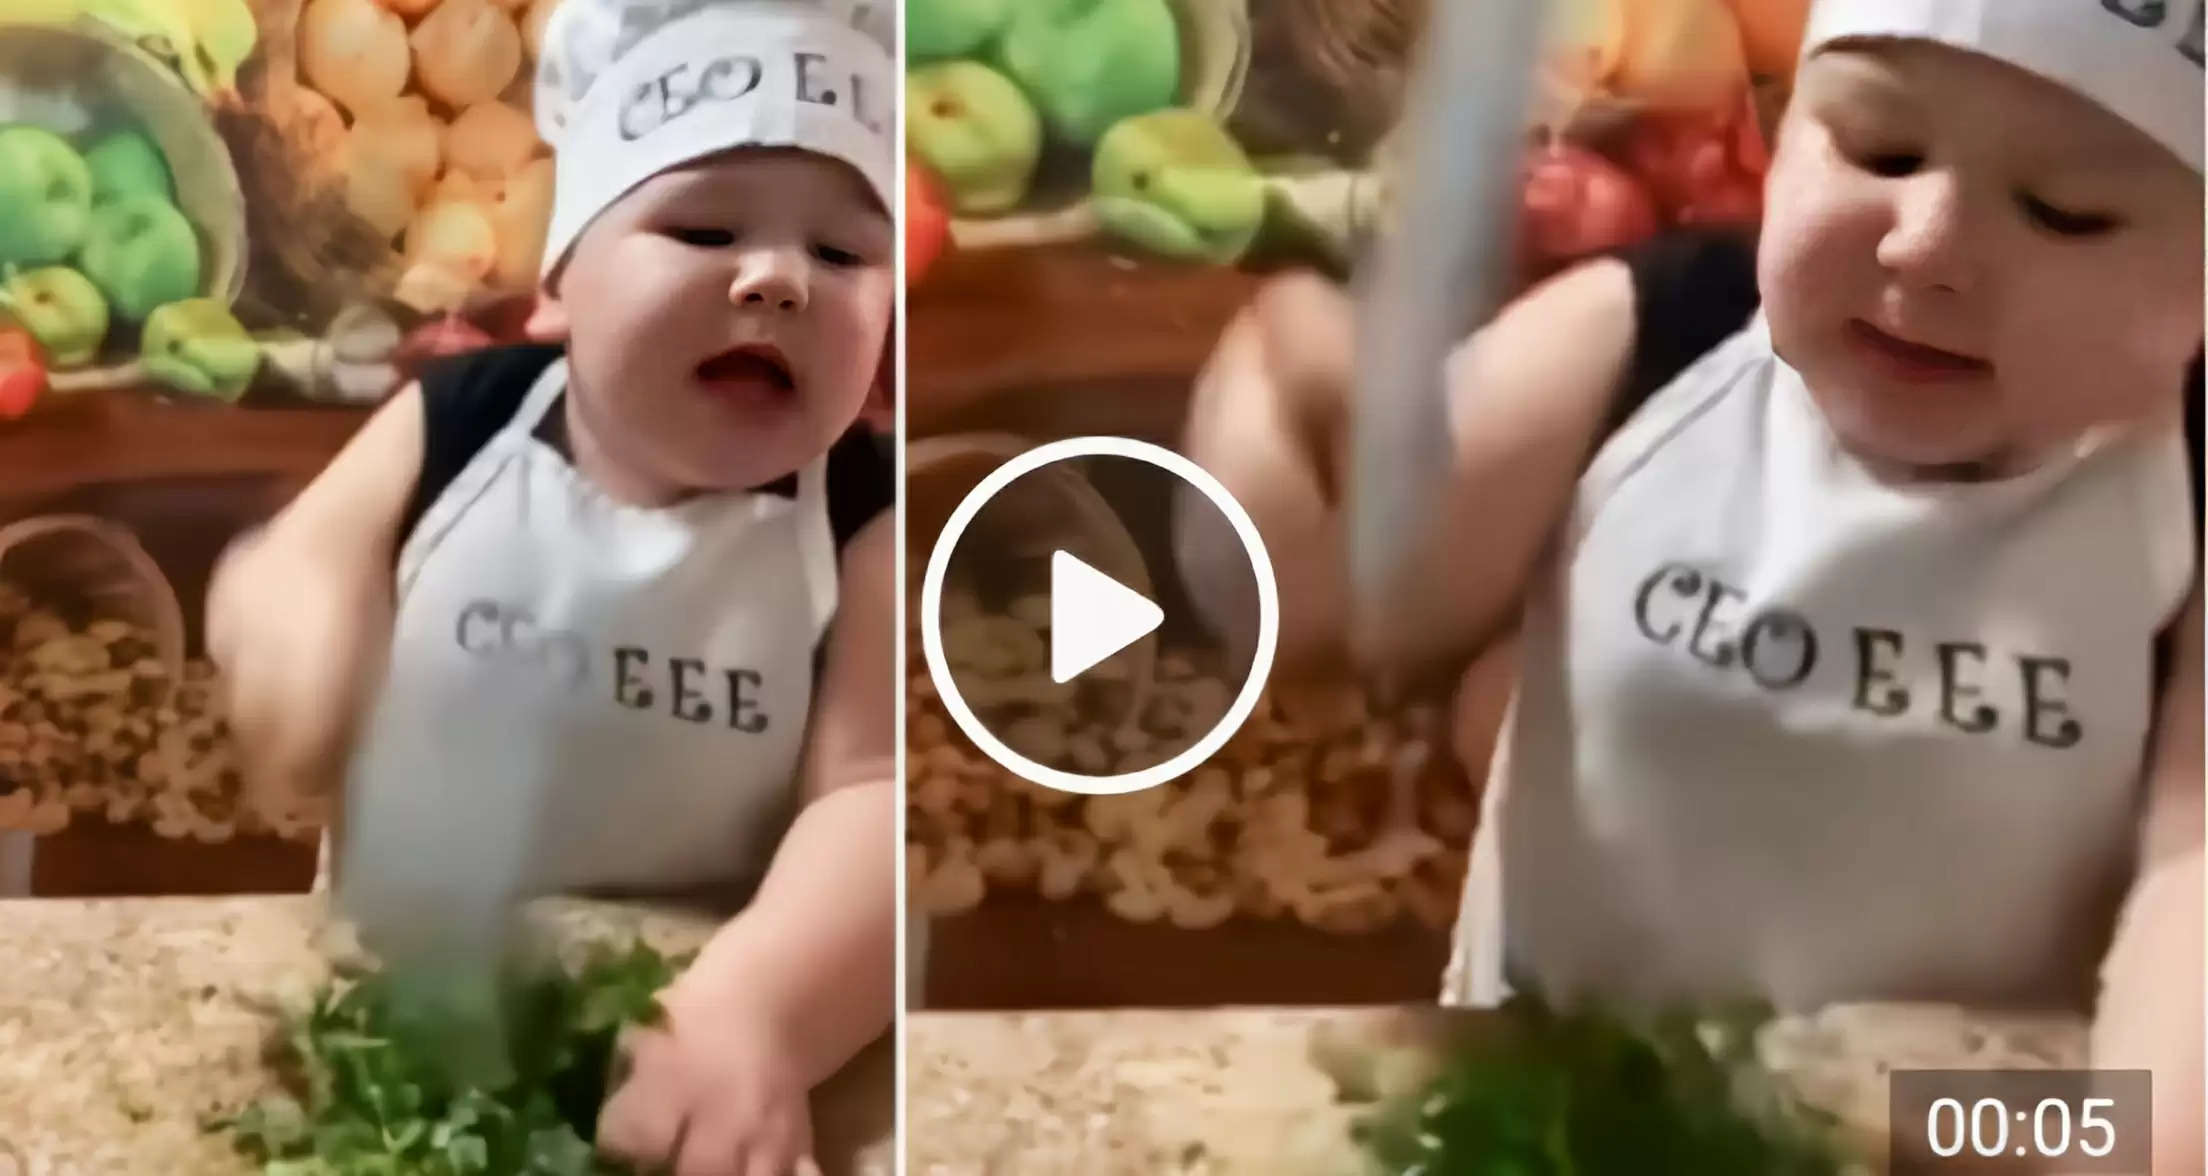 Toddler cutting vegetables